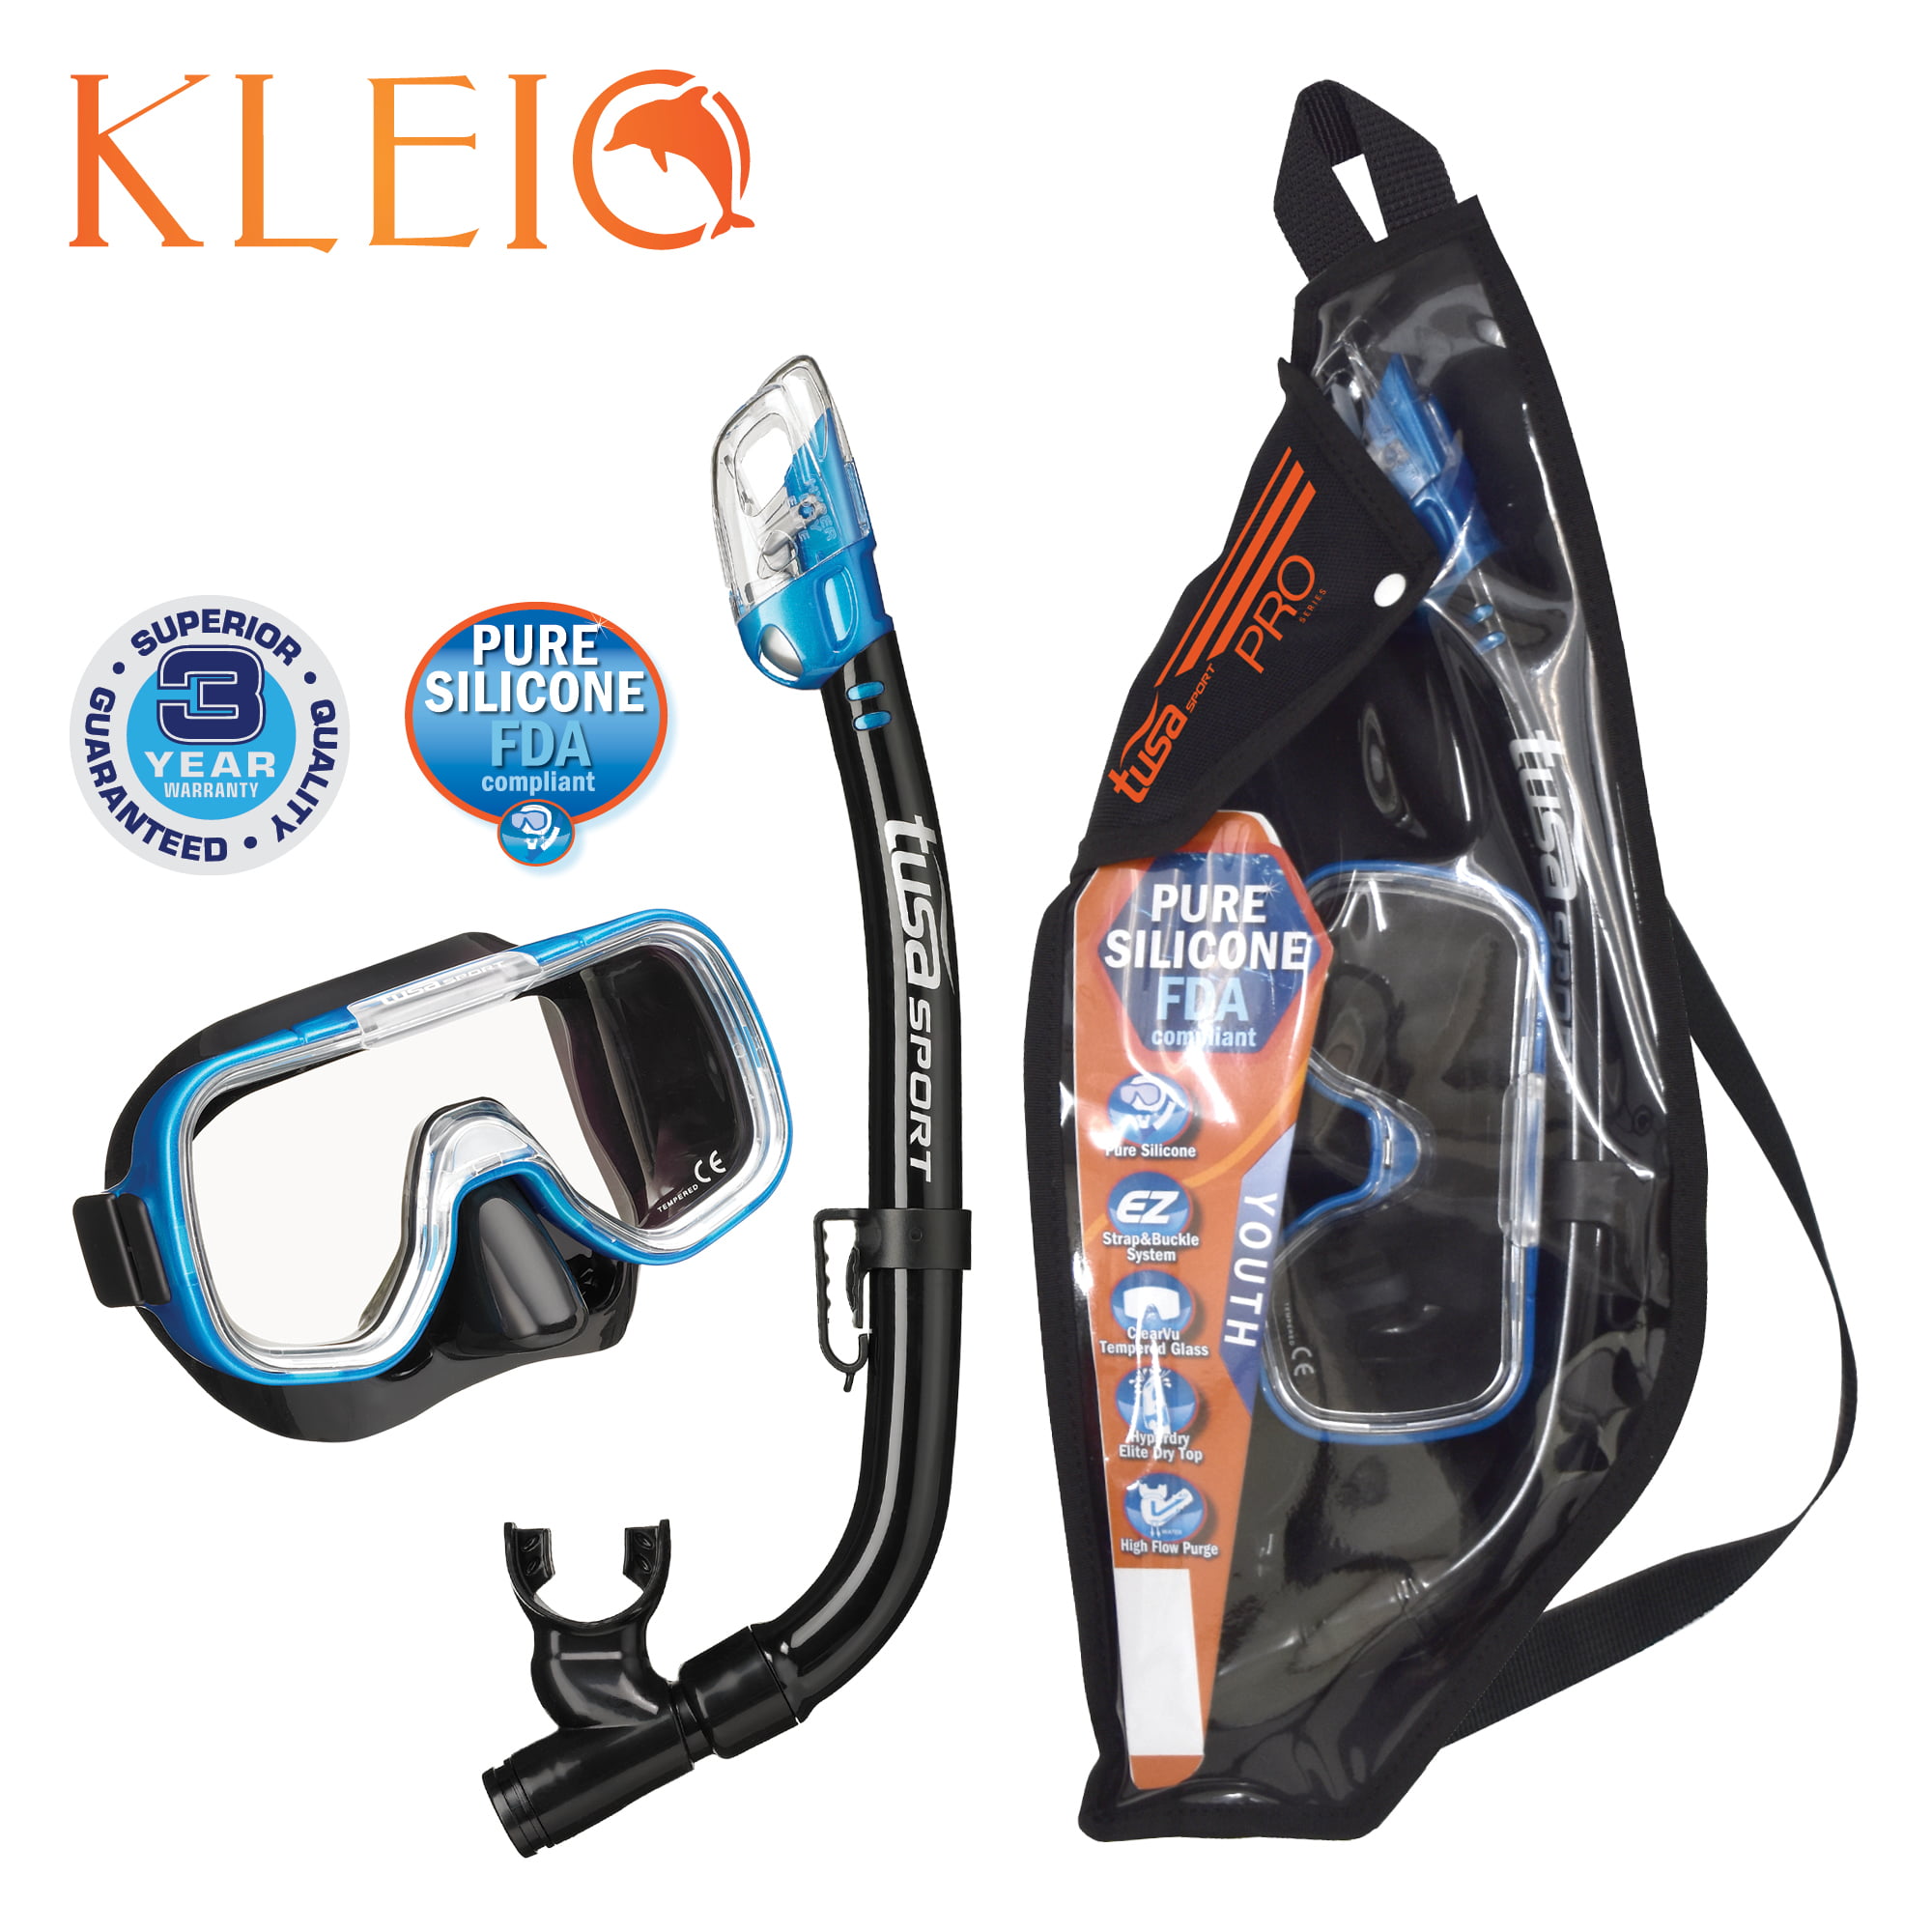 TUSA Sport Youth Mini-Kleio Mask and Dry Snorkel Palestine